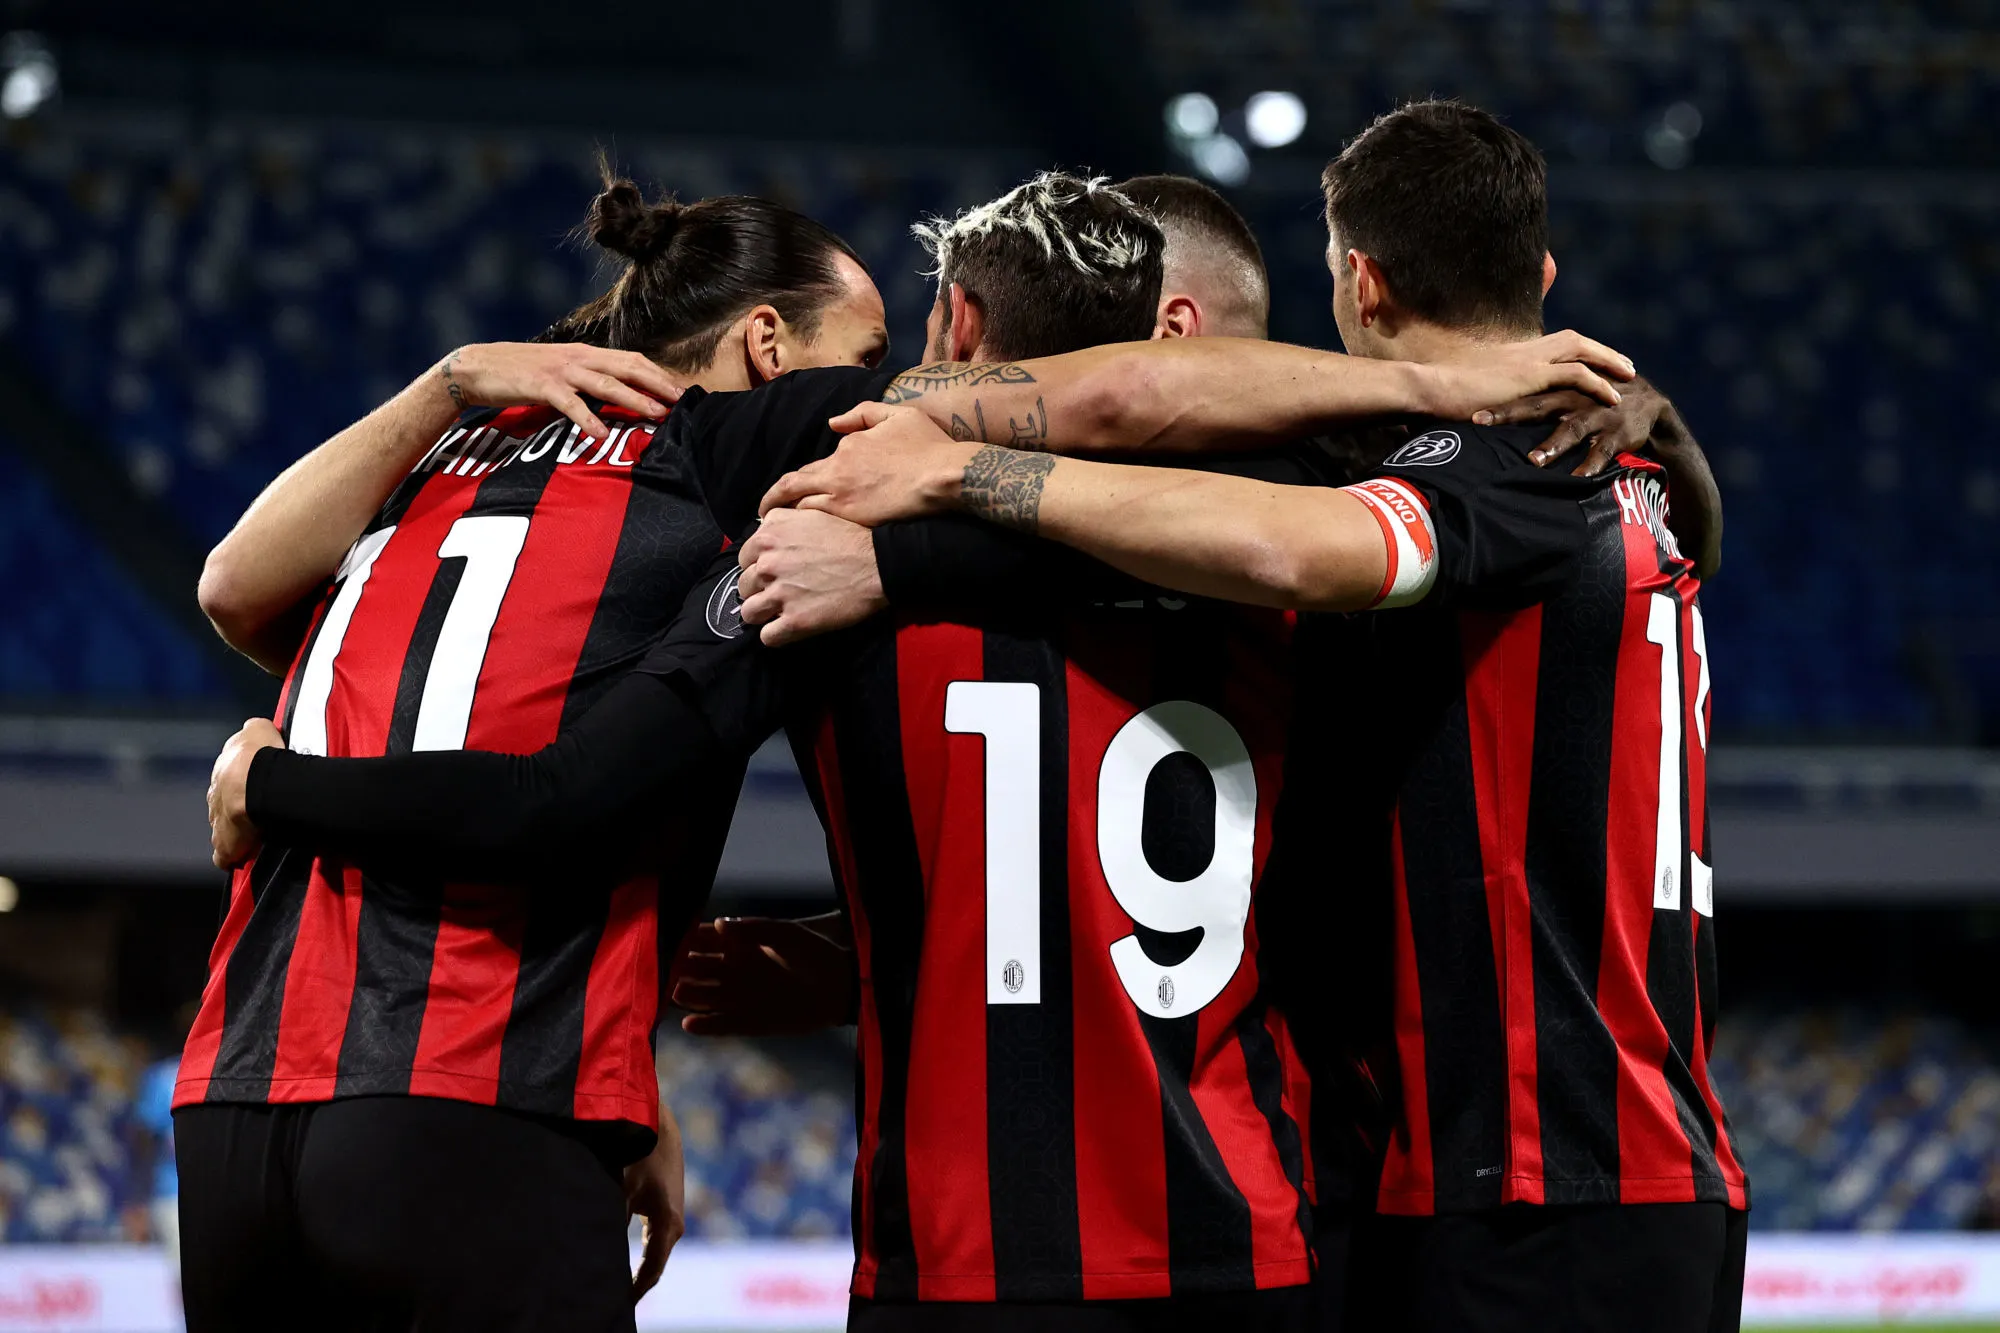 Pronostic Milan AC Atalanta Bergame : Analyse, cotes et prono du match de Serie A